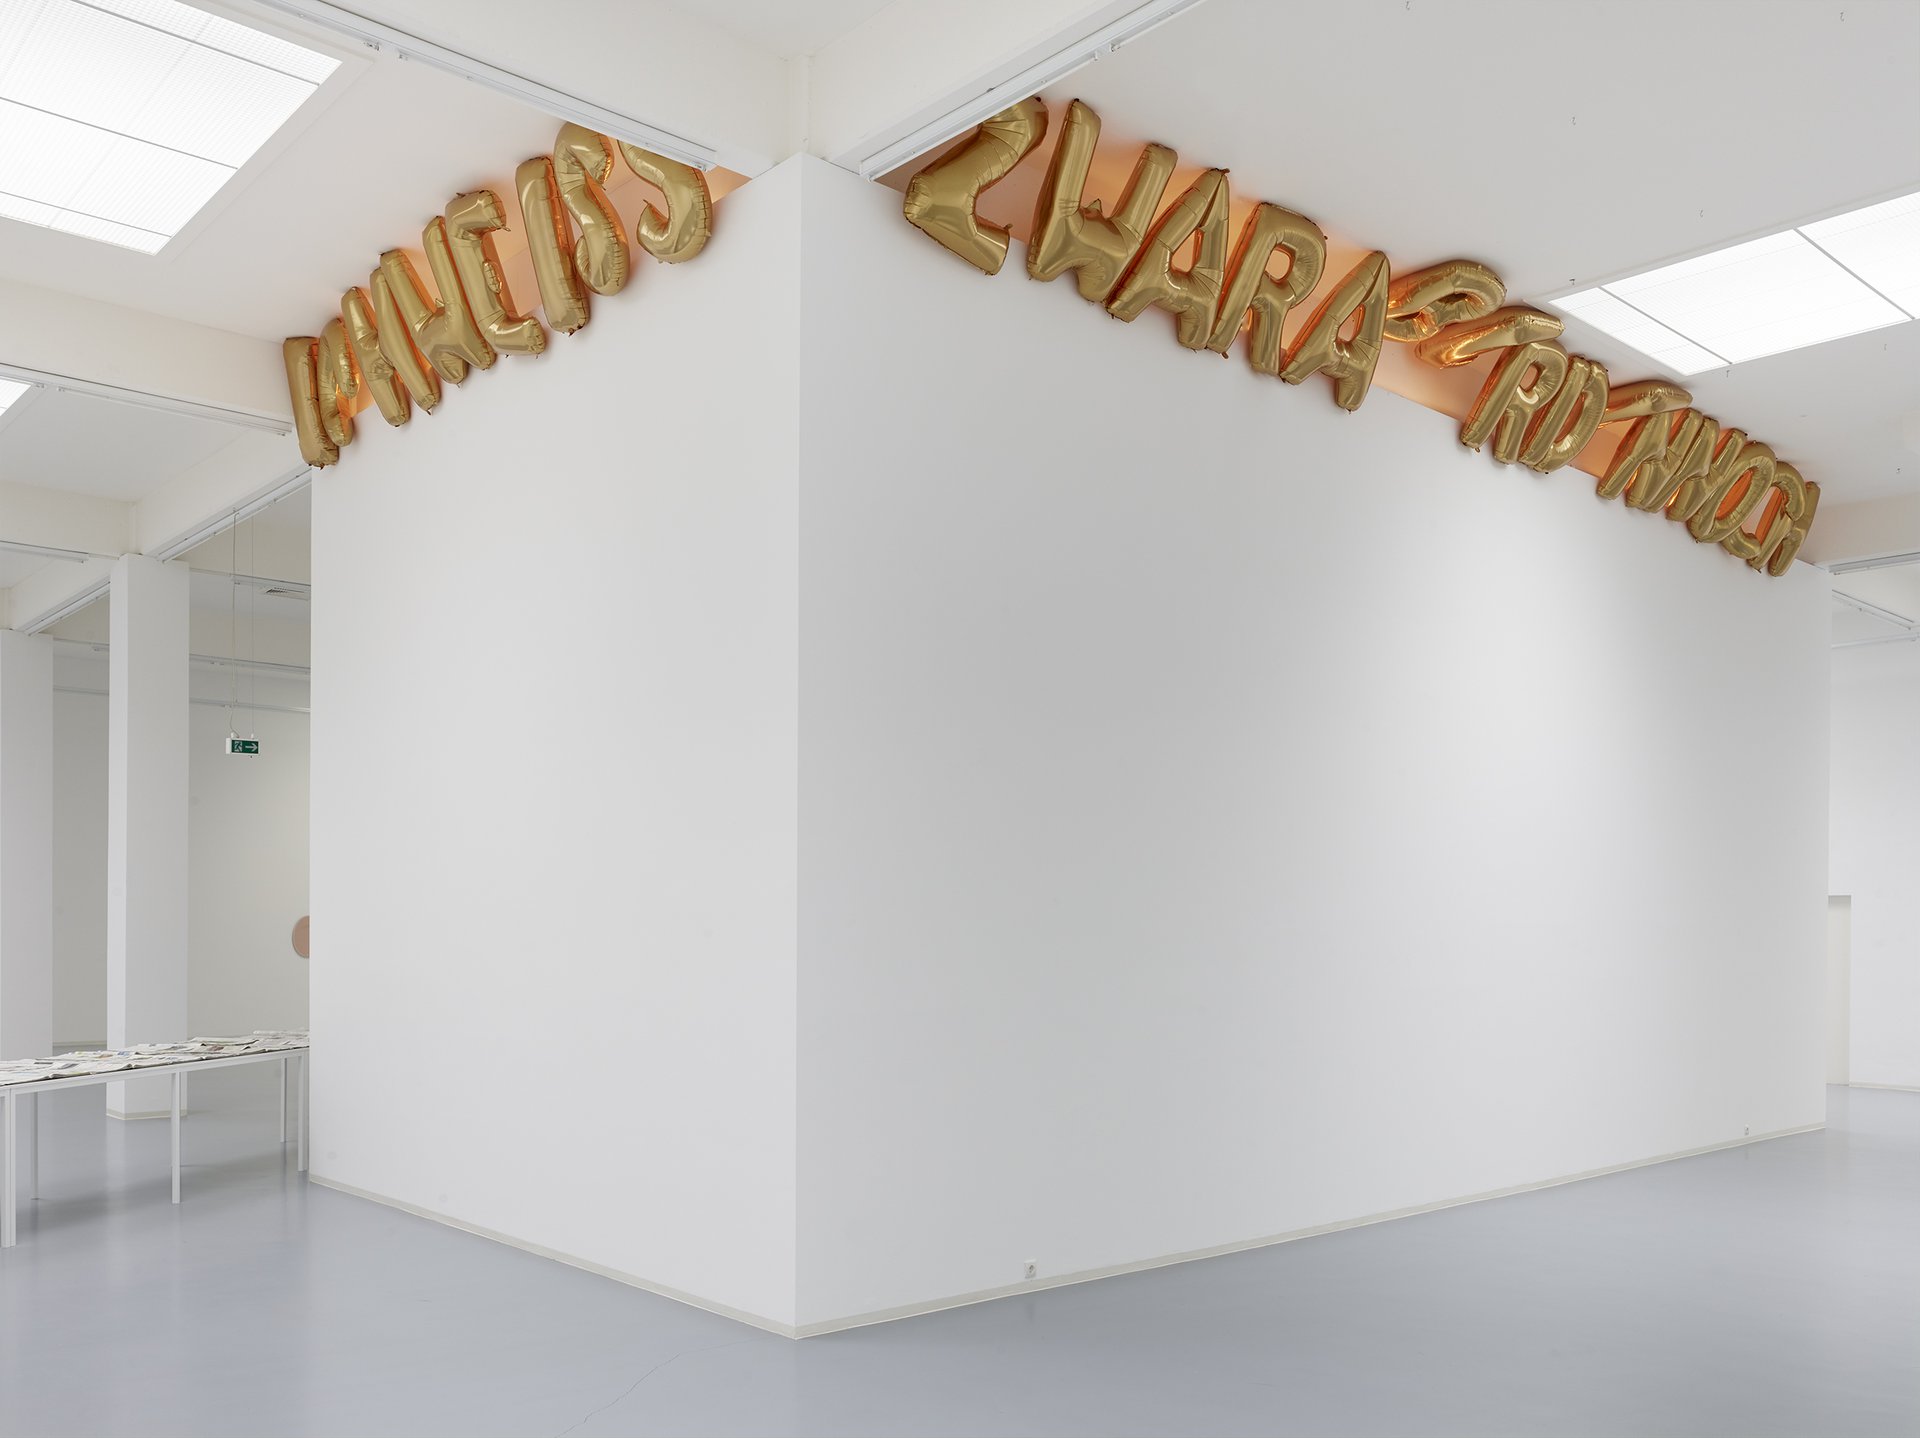 Banu Cennetoğlu, ICHWEISSZWARABERDENNOCH, installation view, 2015, Bonner Kunstverein, Courtesy of the artist and Rodeo, London. Photo: Simon Vogel